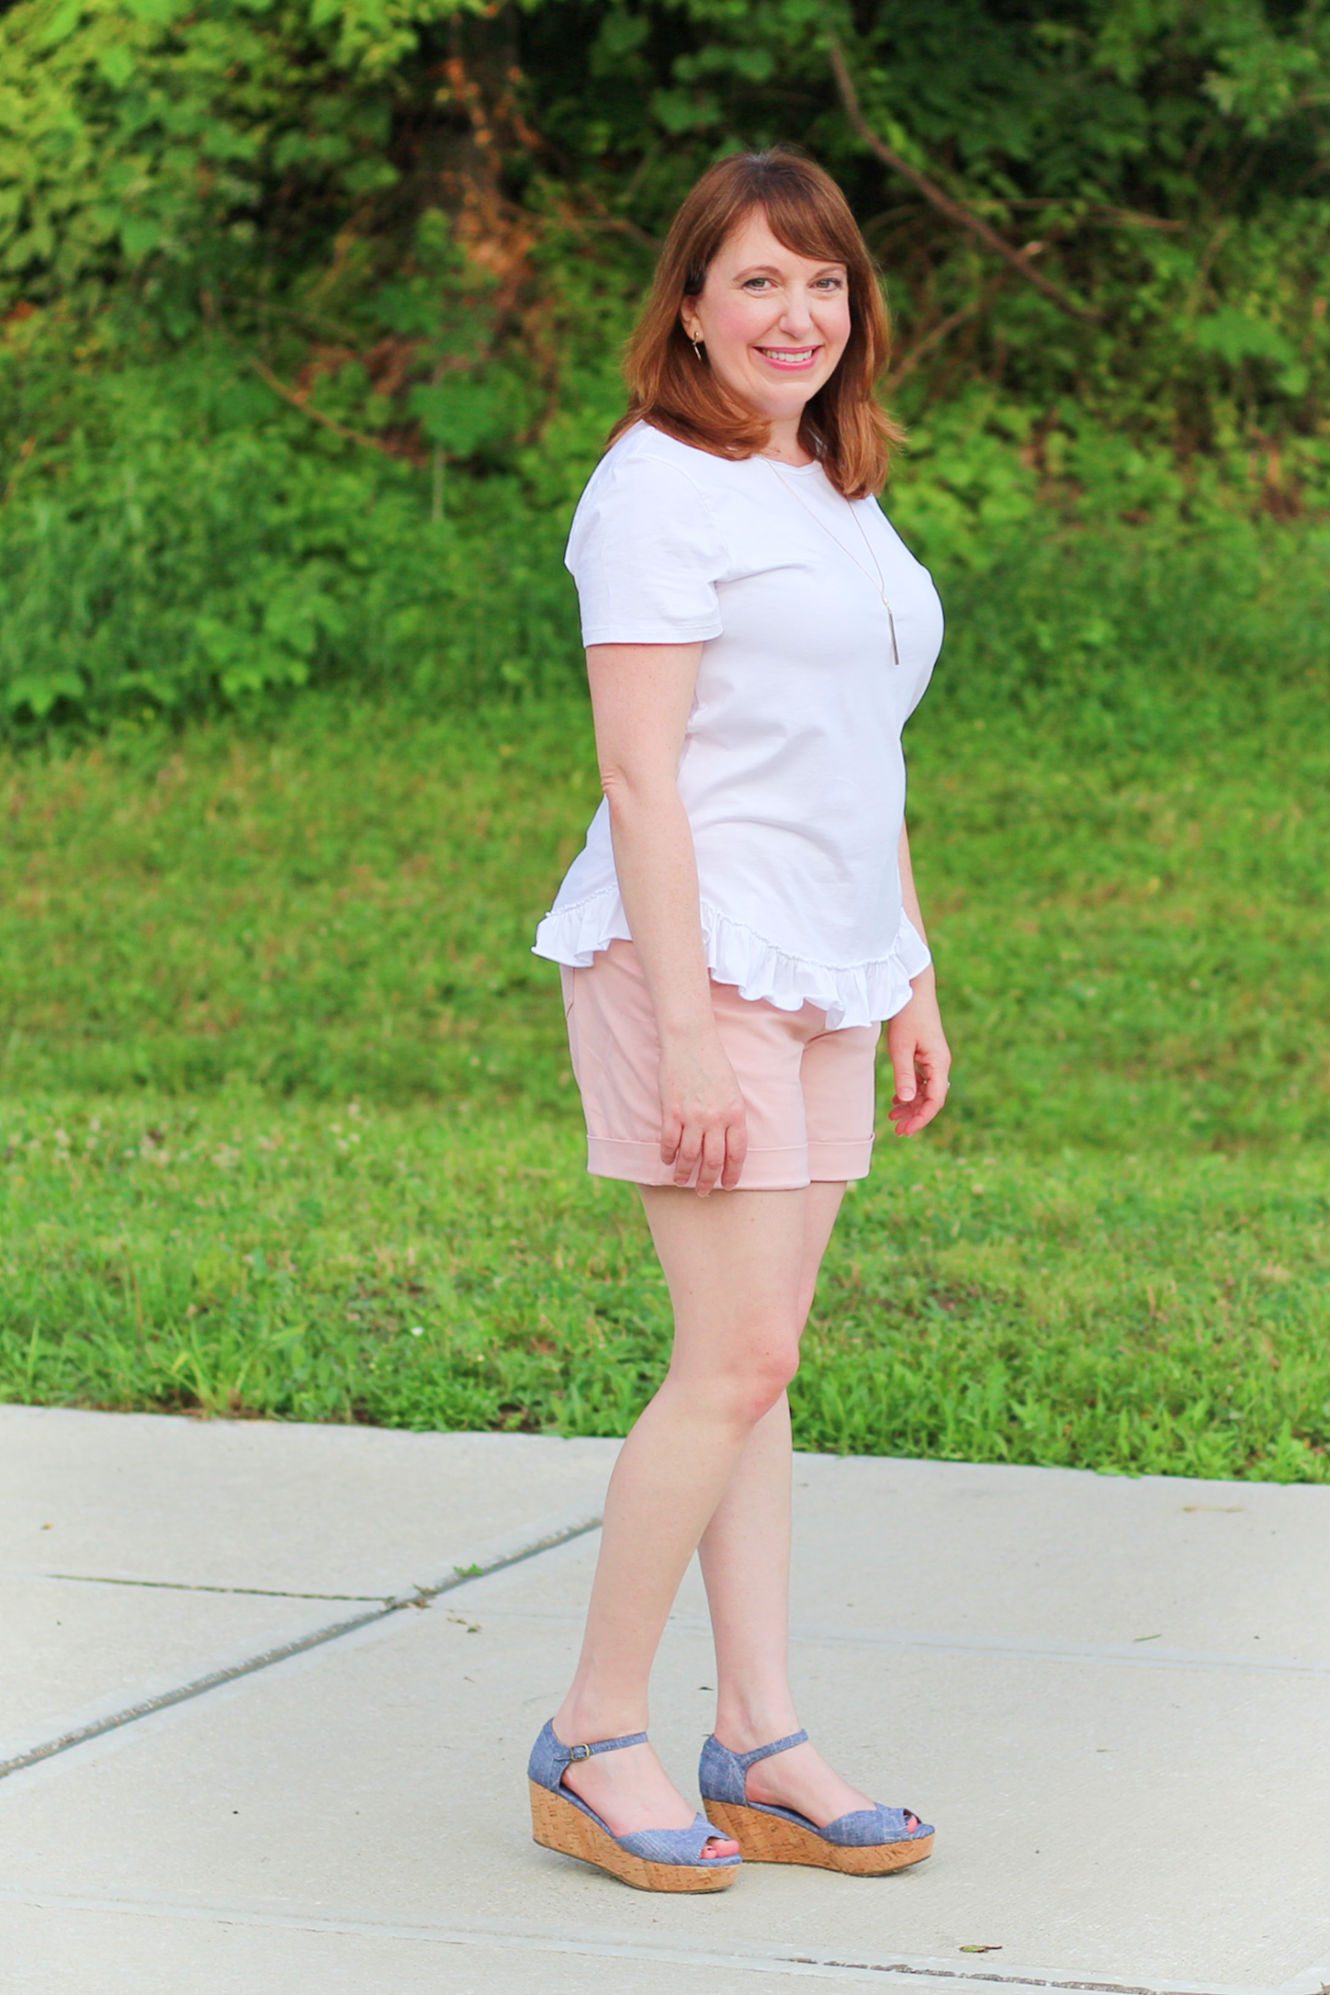 White Peplum Top And Blush Shorts #fashionover40 #summeroutfit #fashion #style